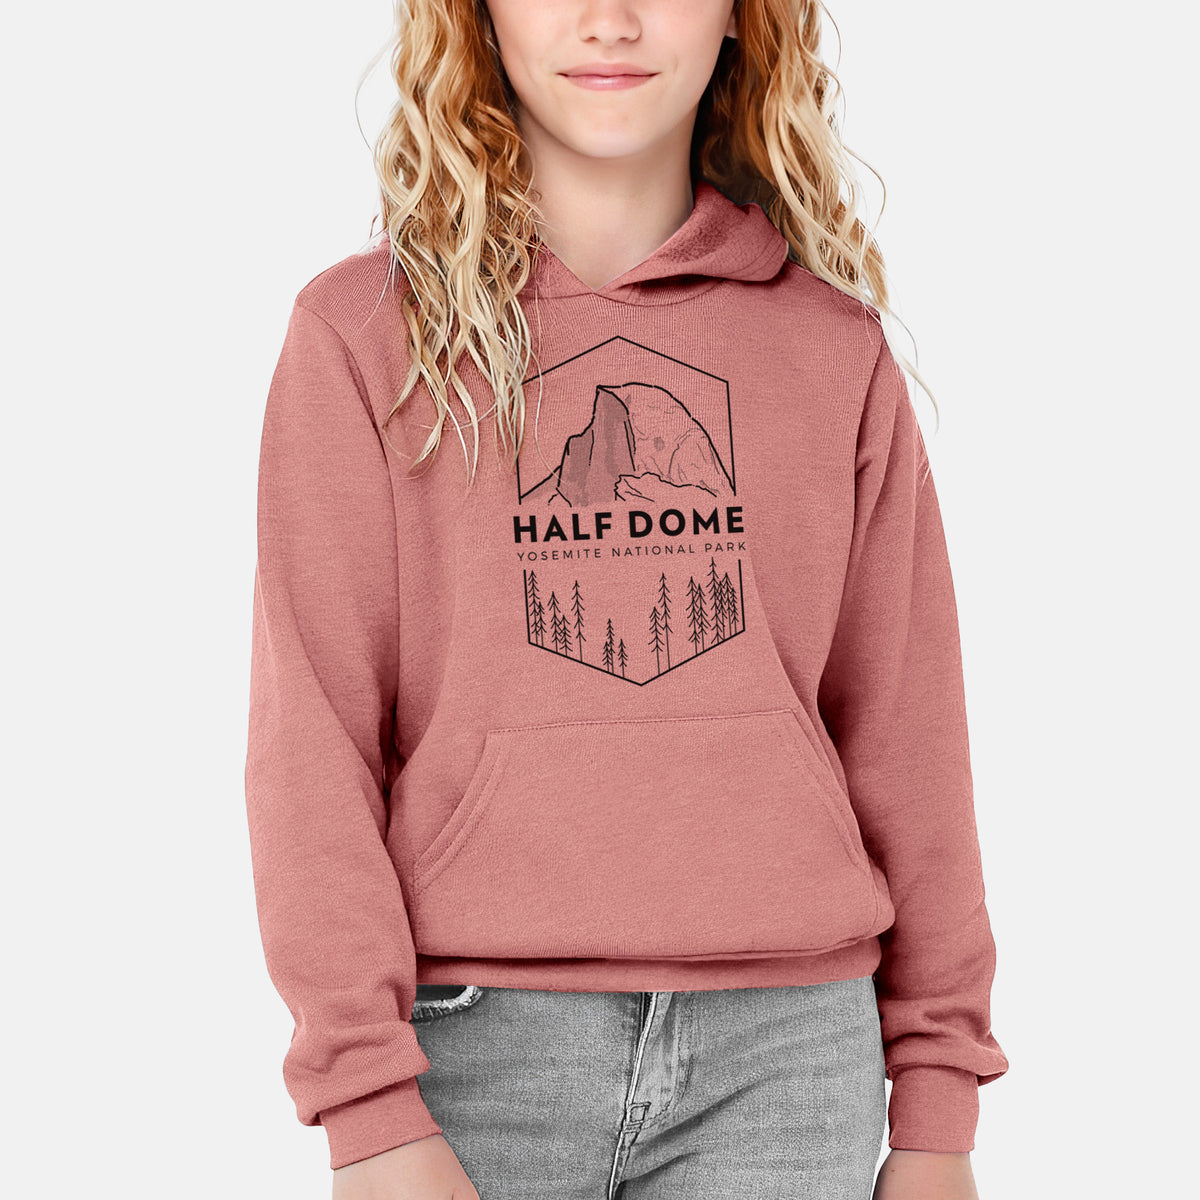 Half Dome - Yosemite National Park - Youth Hoodie Sweatshirt